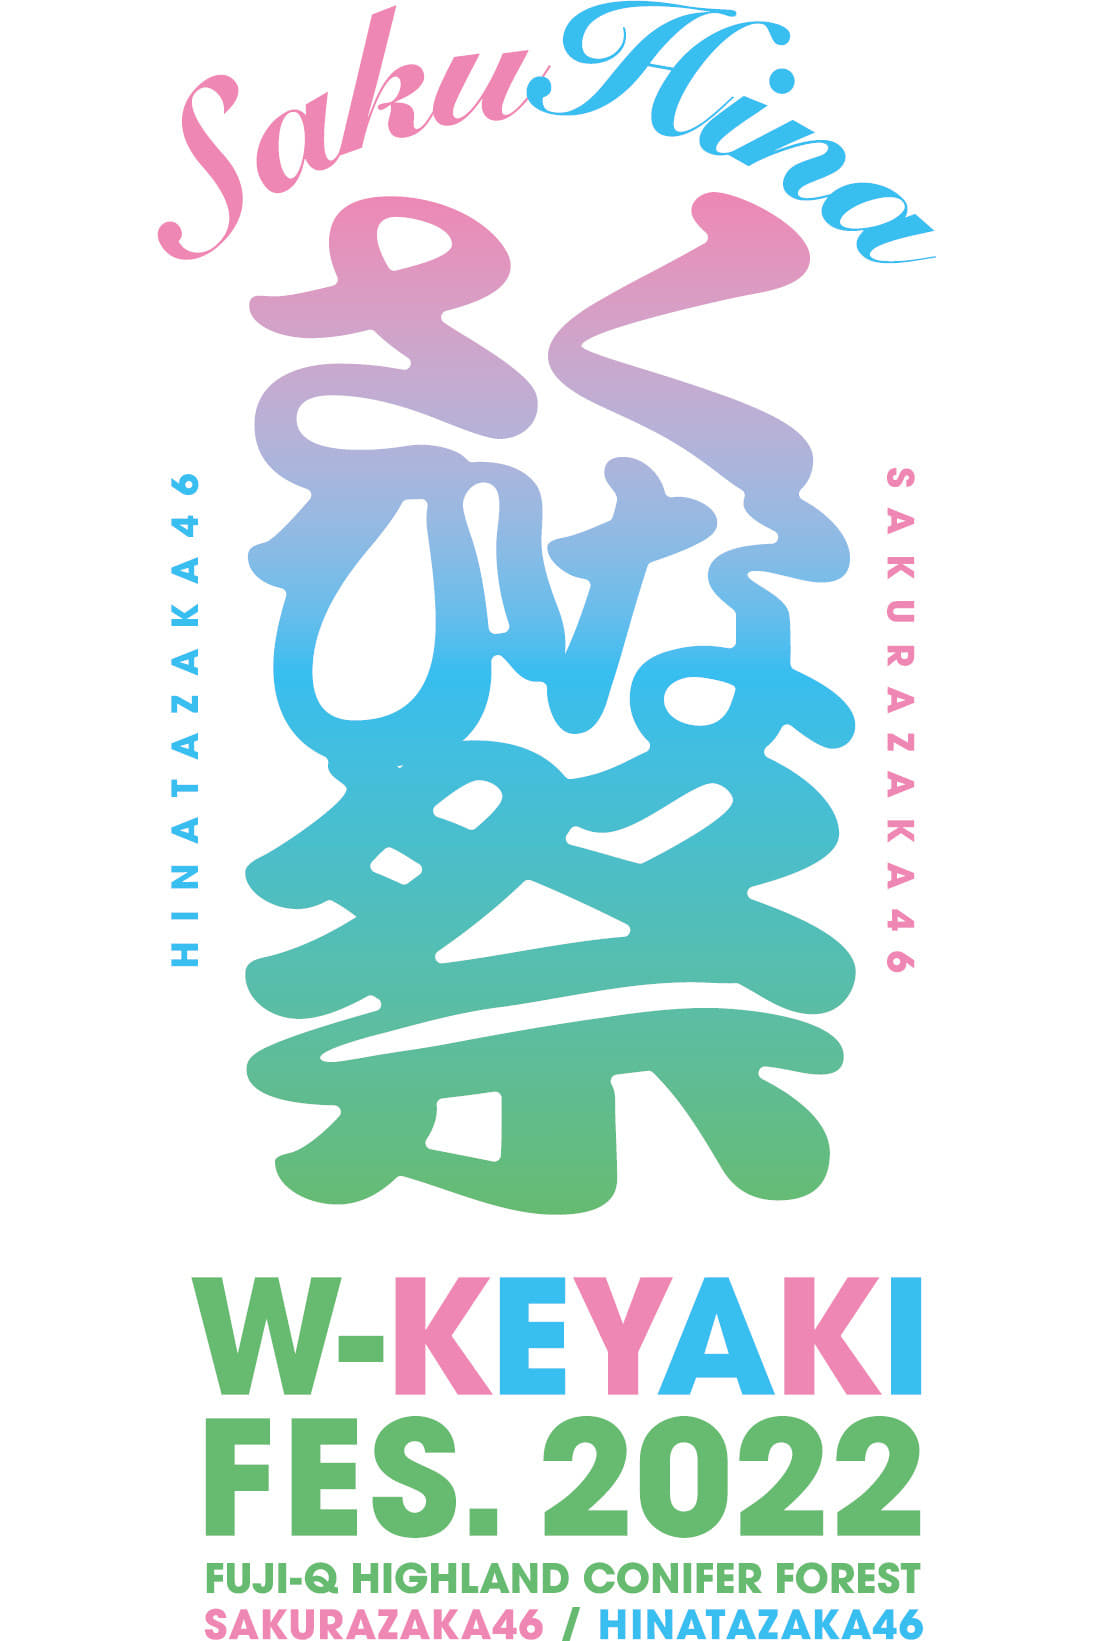 W-KEYAKI FES. 2022 「Hinatazaka46」